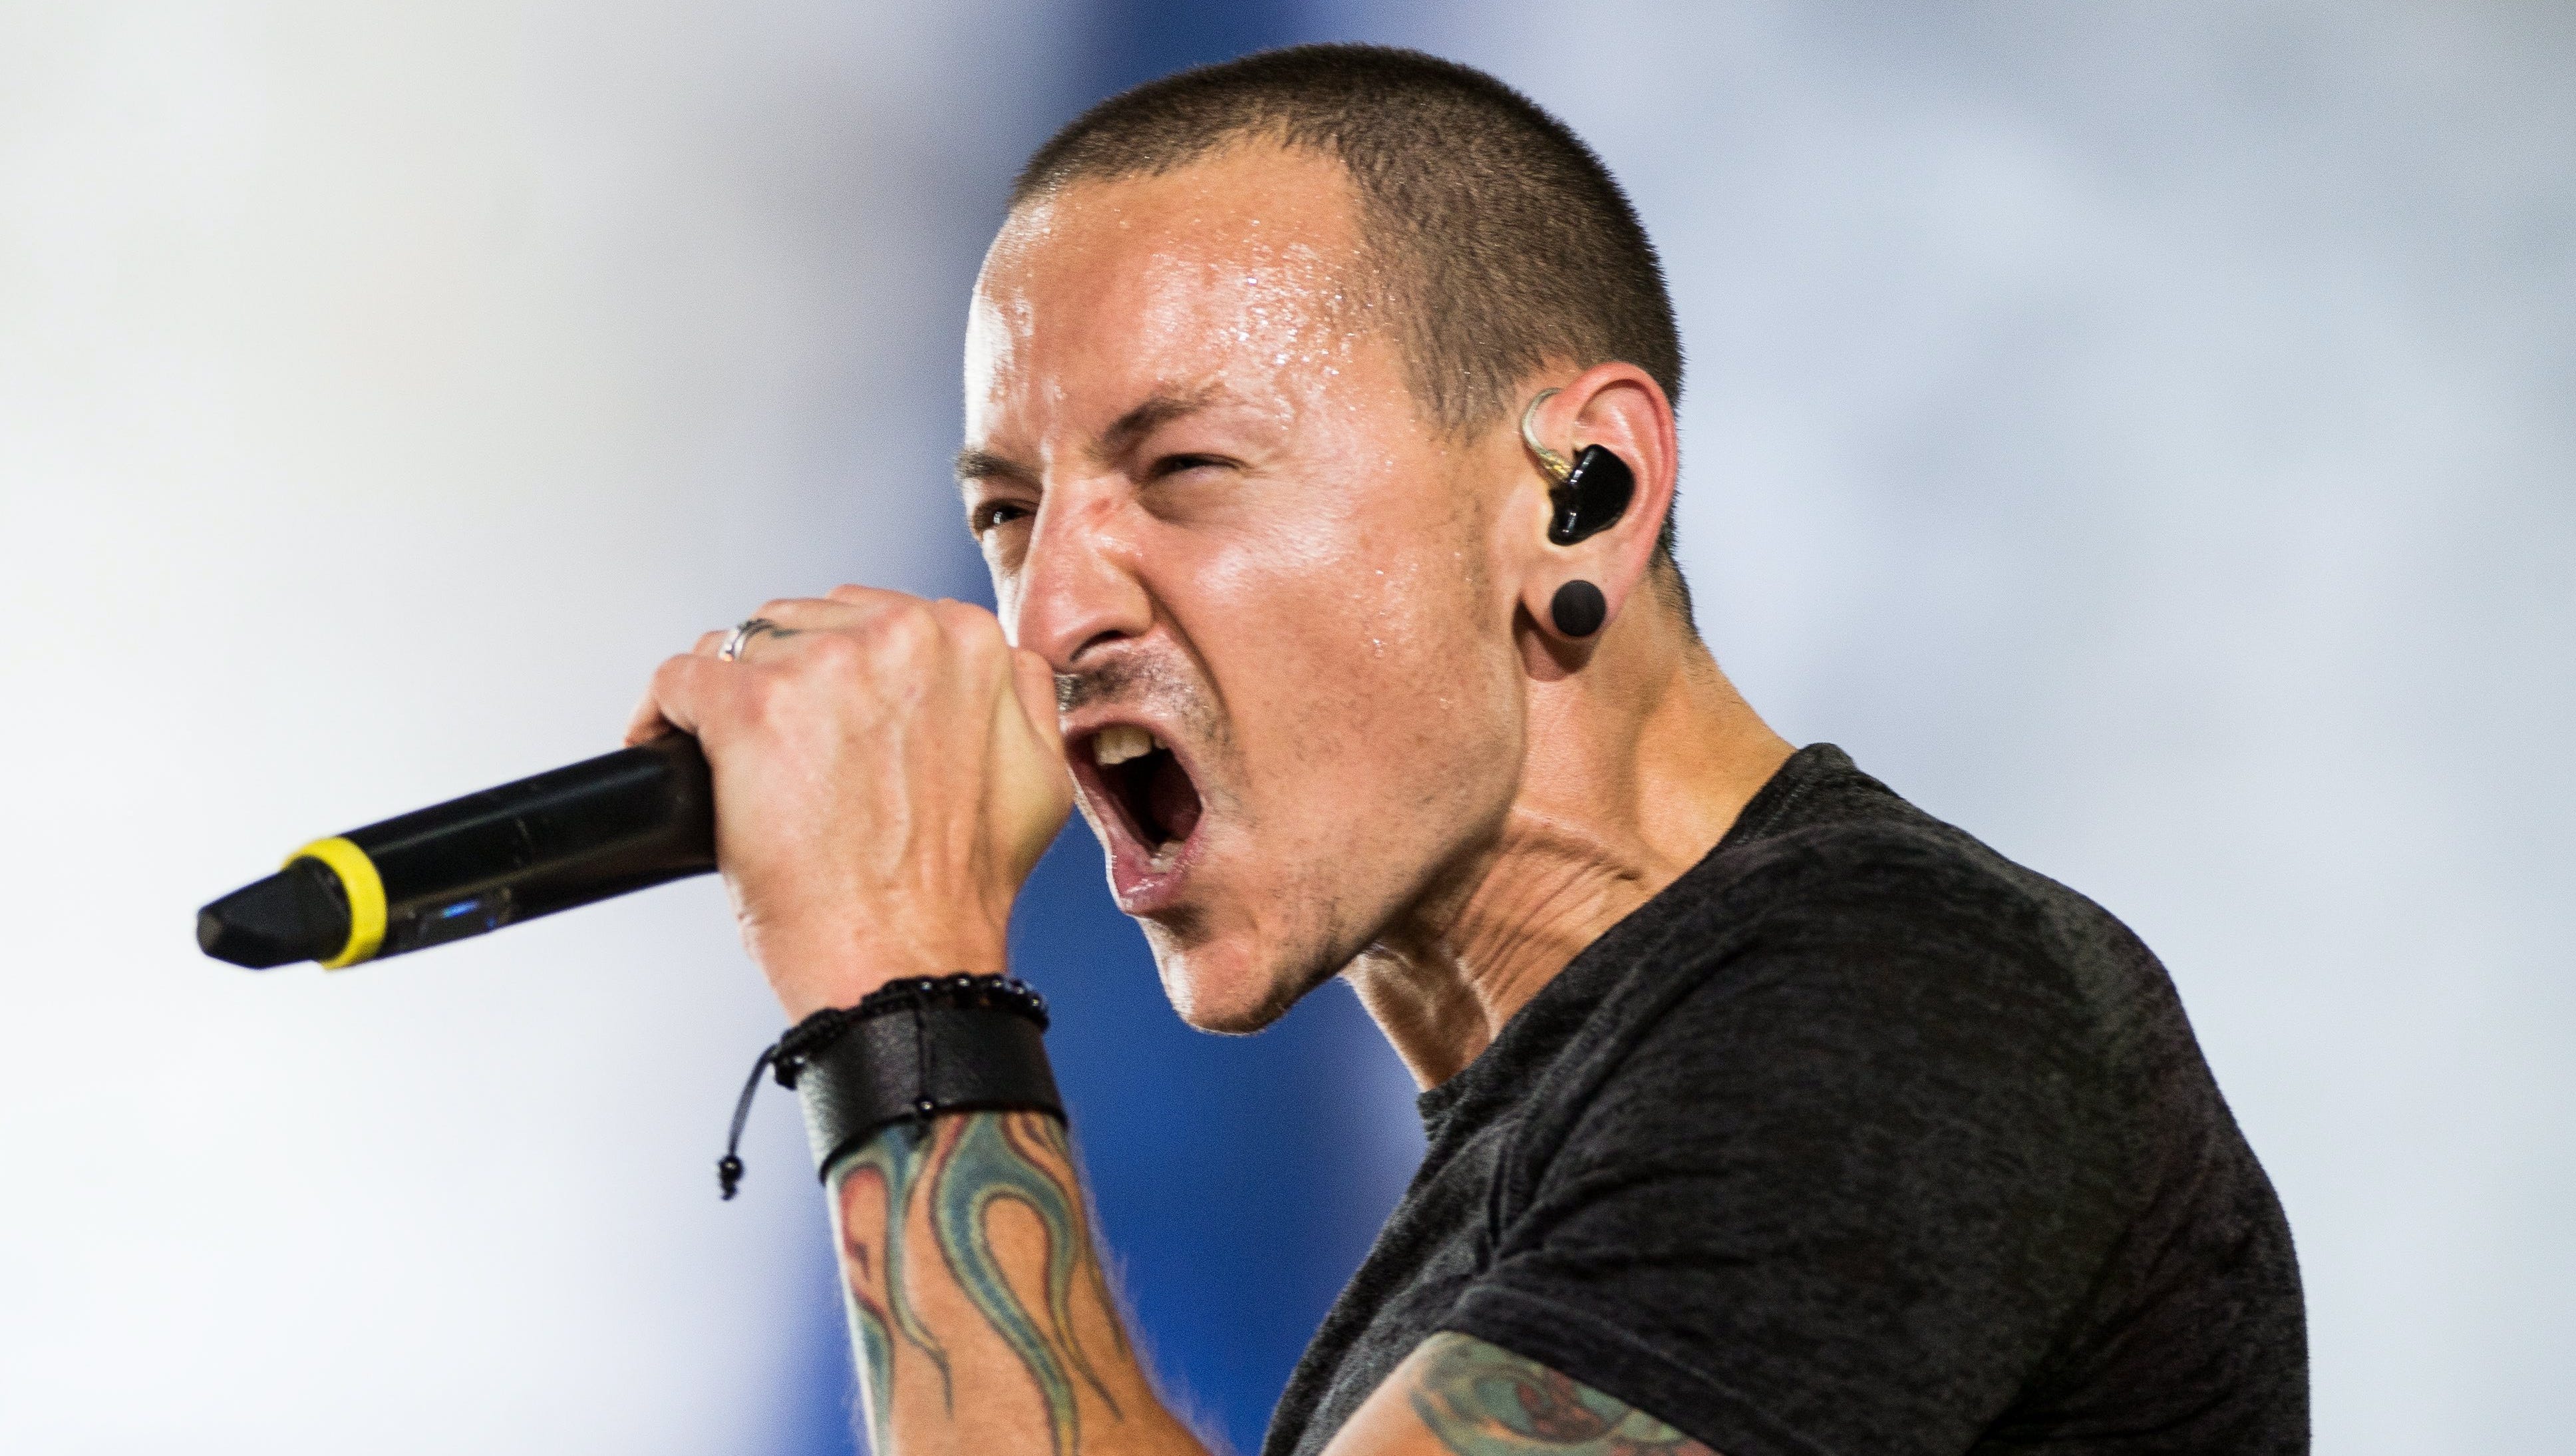 Linkin Park singer Chester Bennington's toxicology report released